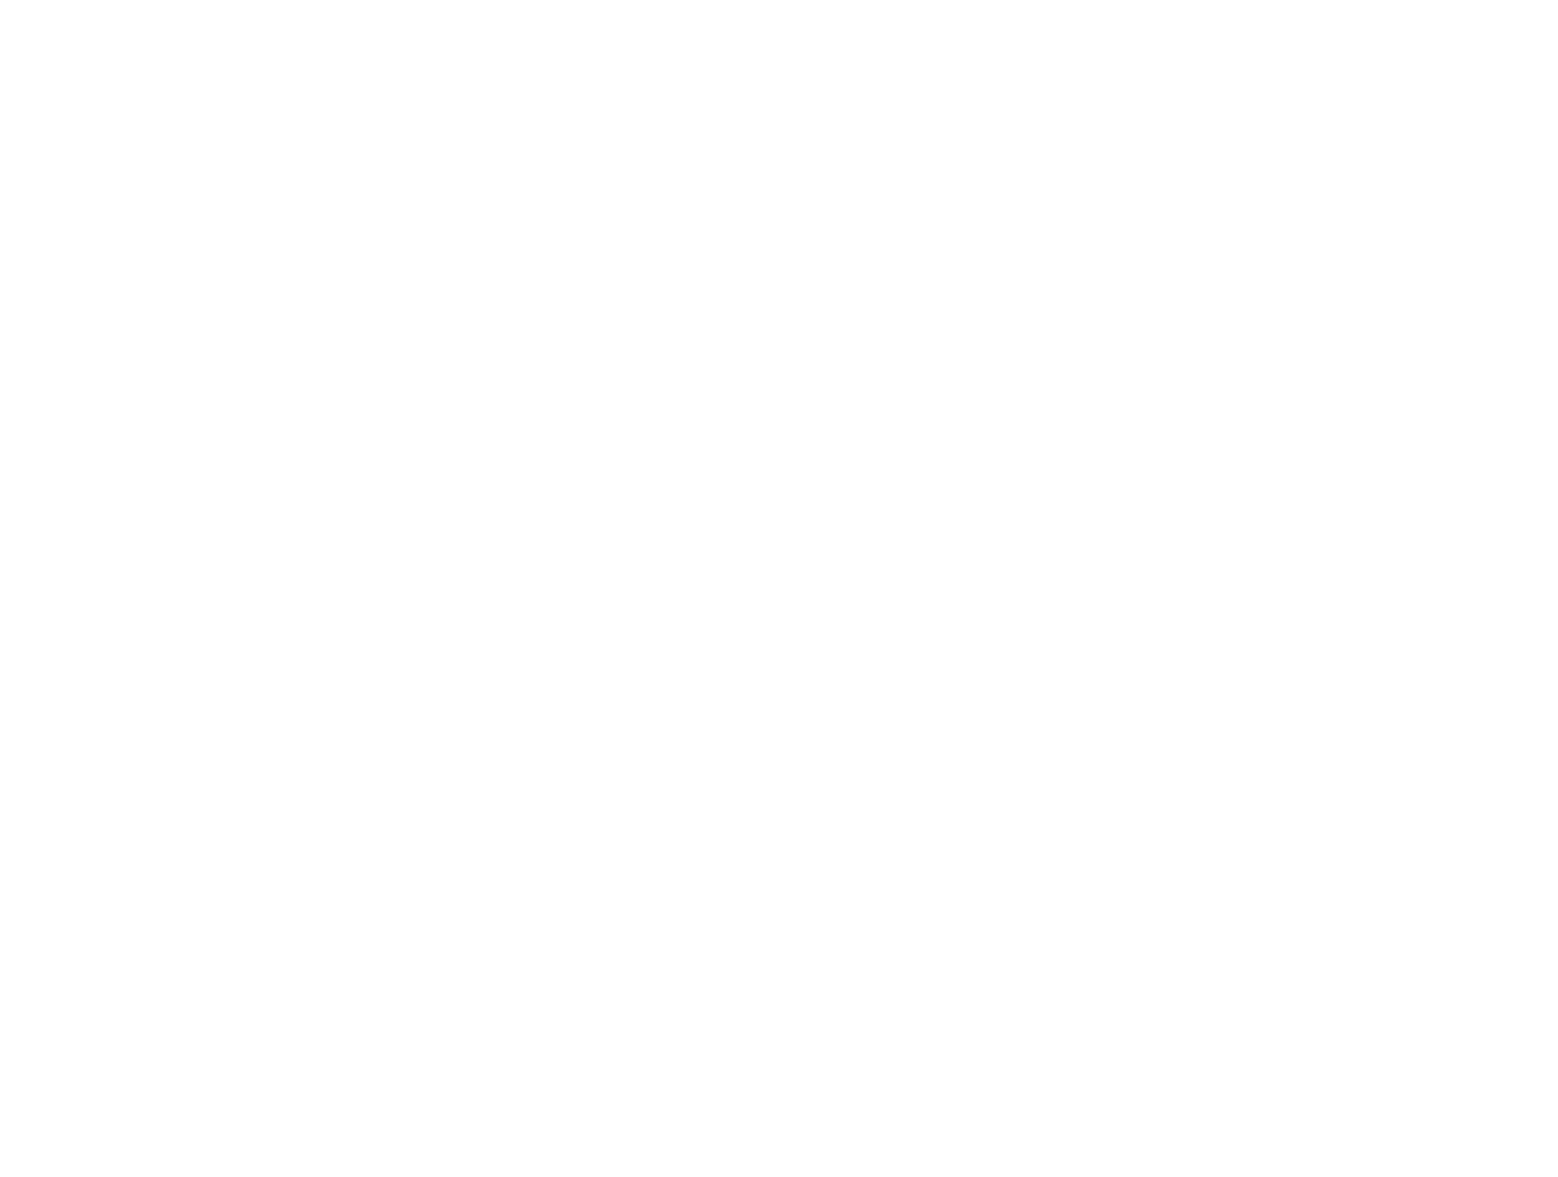 Paying It Forward